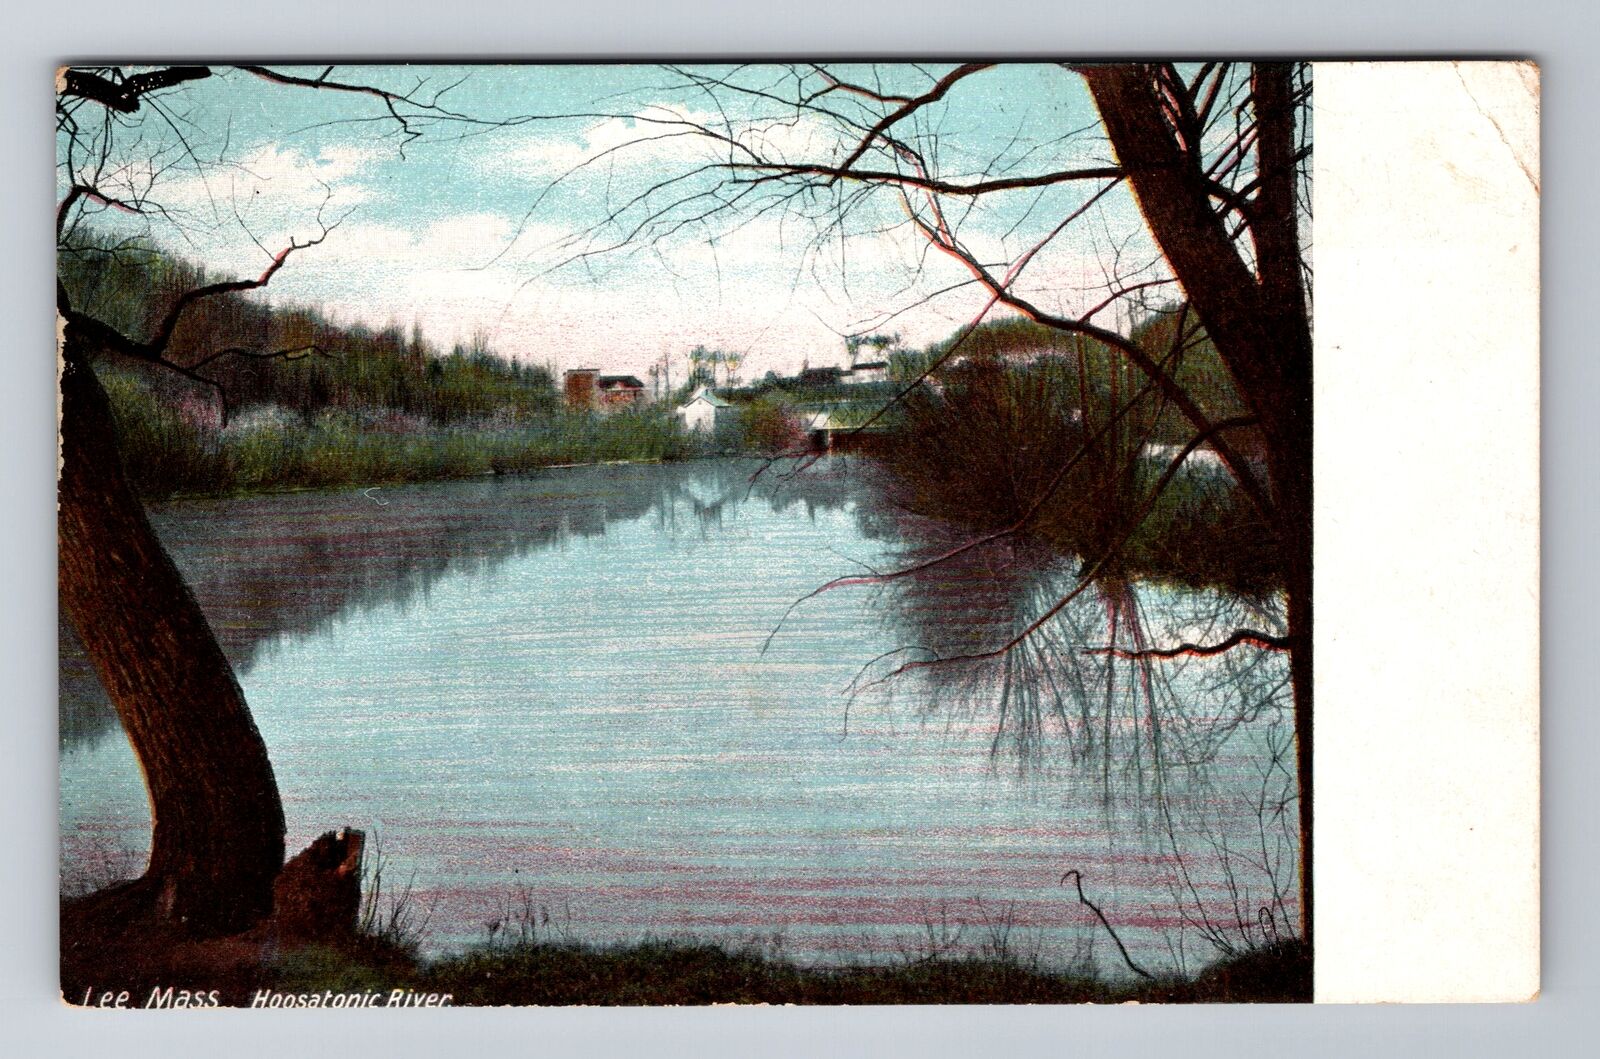 Lee MA-Massachusetts, Scenic Housatonic River View, Antique Vintage Postcard